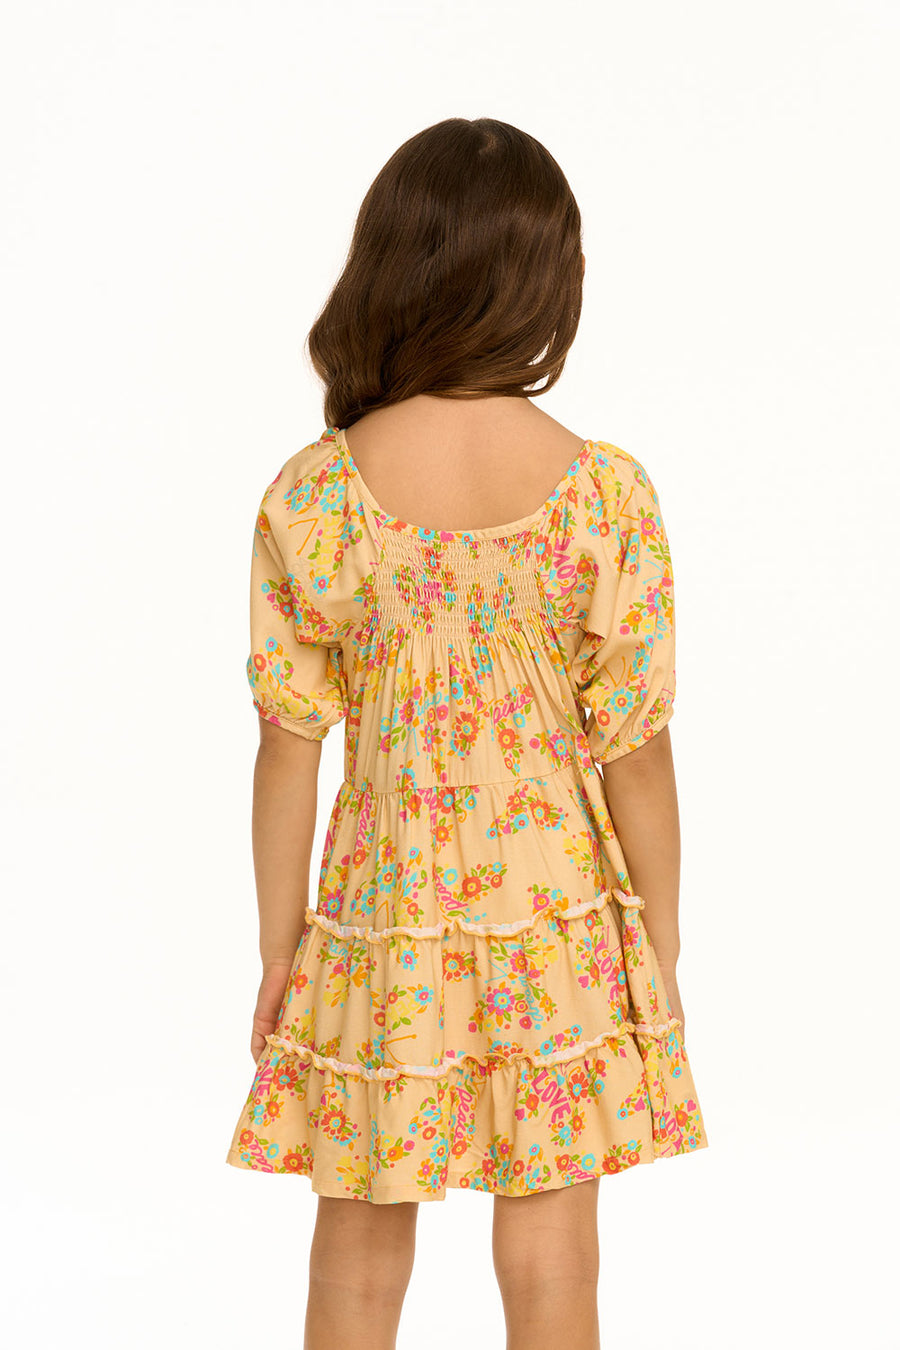 Salina Summer of Love Print Dress GIRLS chaserbrand